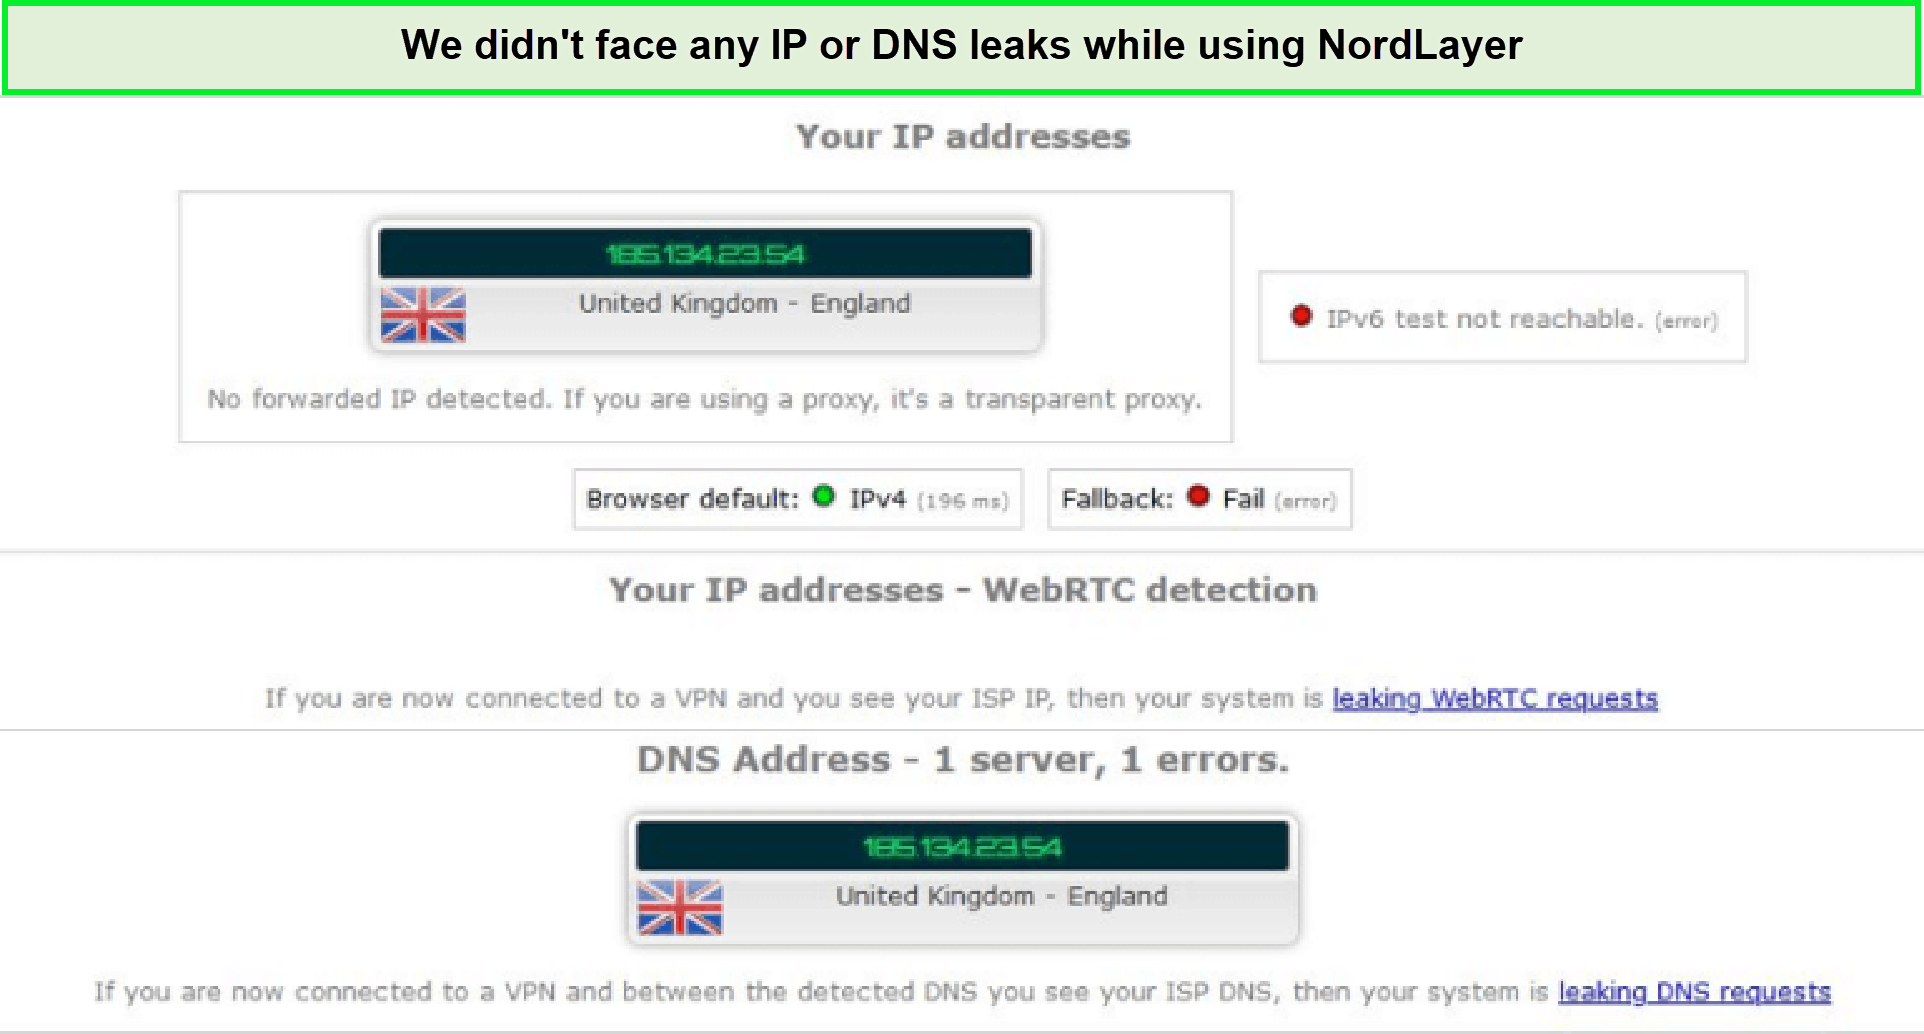 nordlayer-ip-dns-leak-test